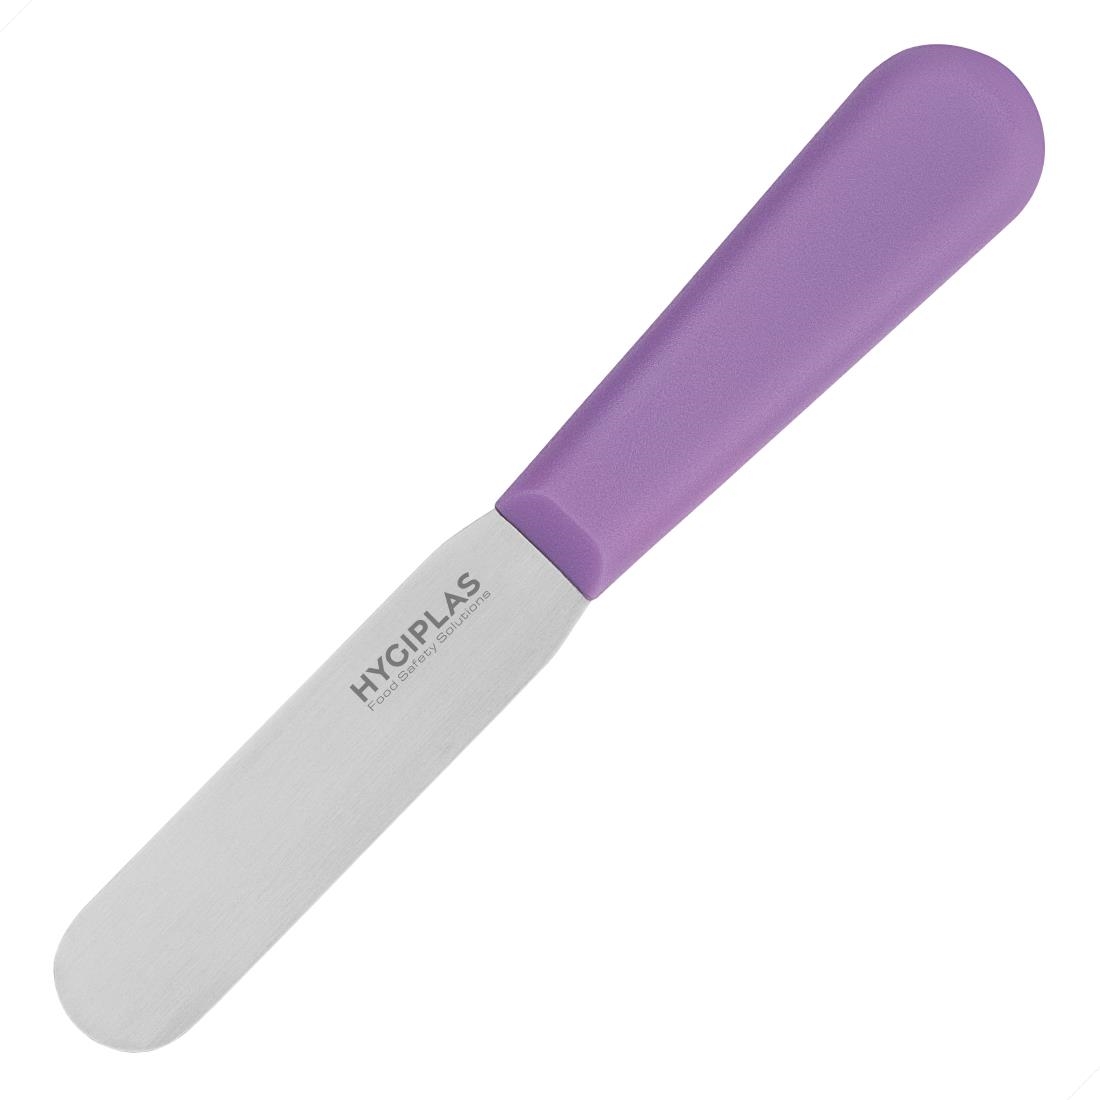 Hygiplas Palette Knife Purple 10.1cm